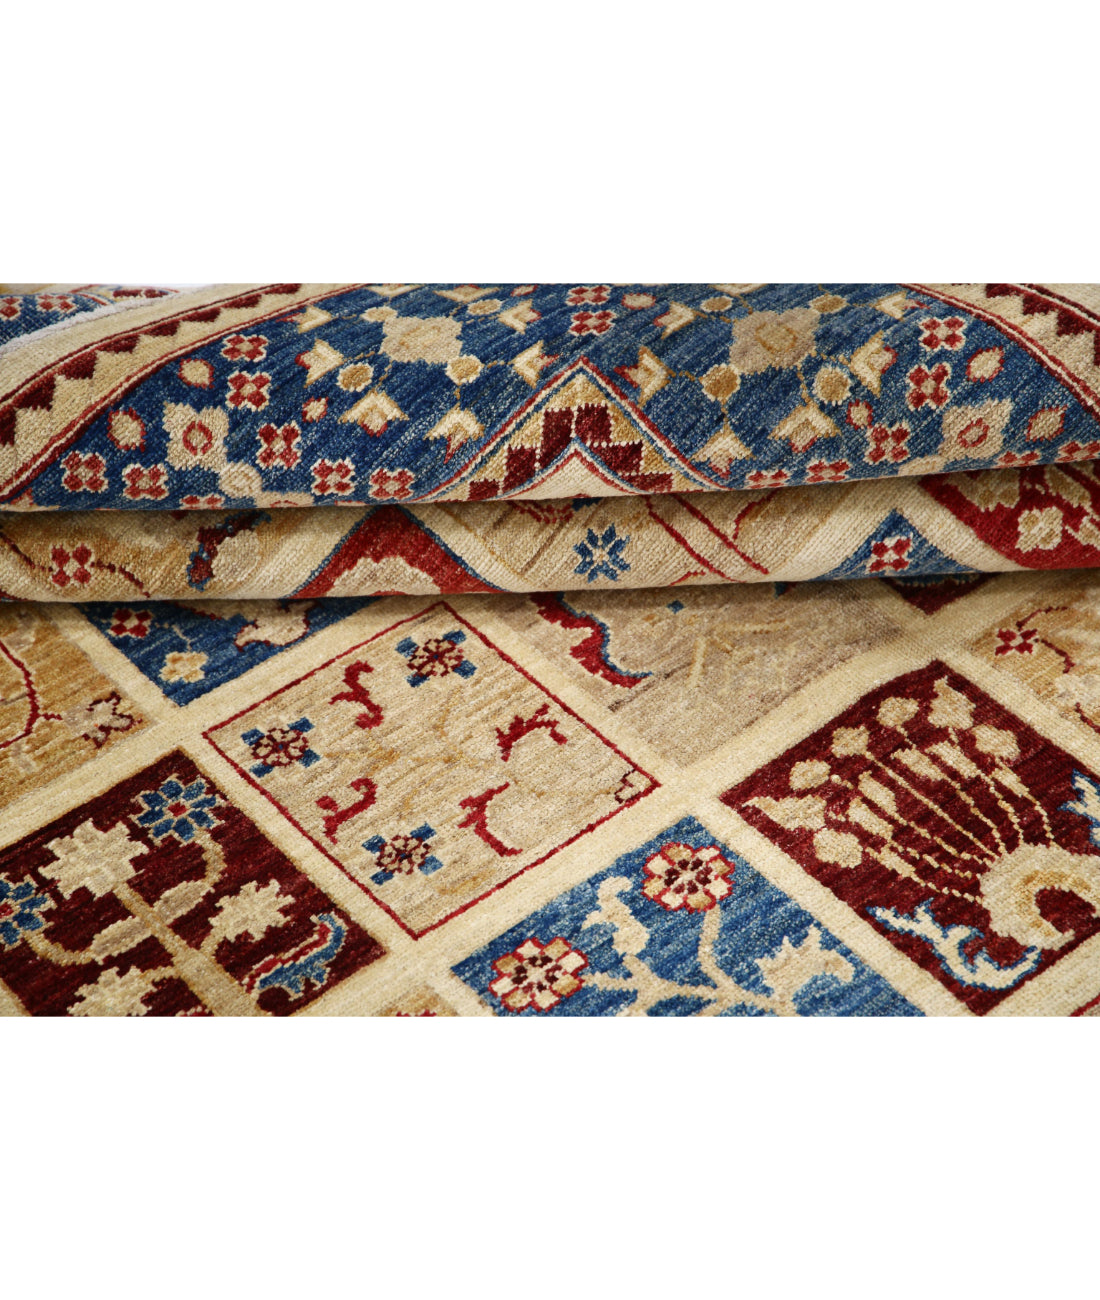 Hand Knotted Bakhtiari Wool Rug - 5'7'' x 7'8'' 5'7'' x 7'8'' (168 X 230) / Multi / Ivory